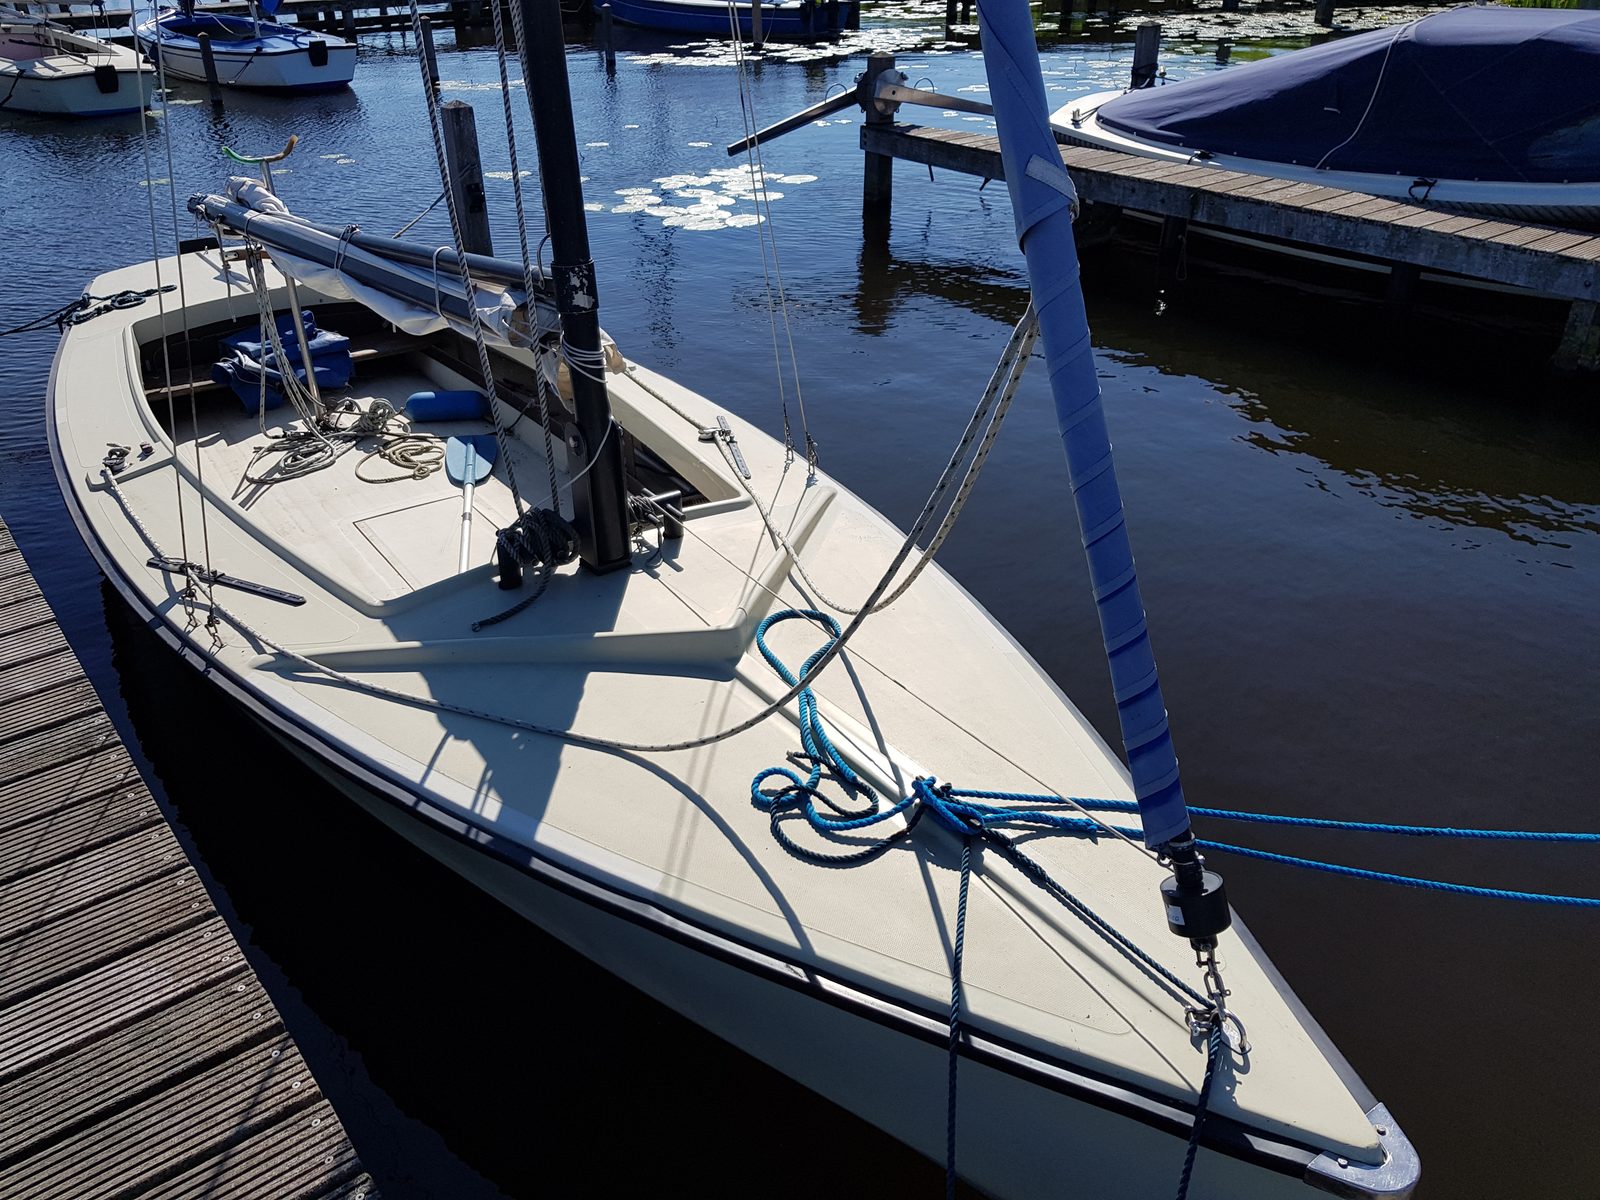 Sailboat rental for guests